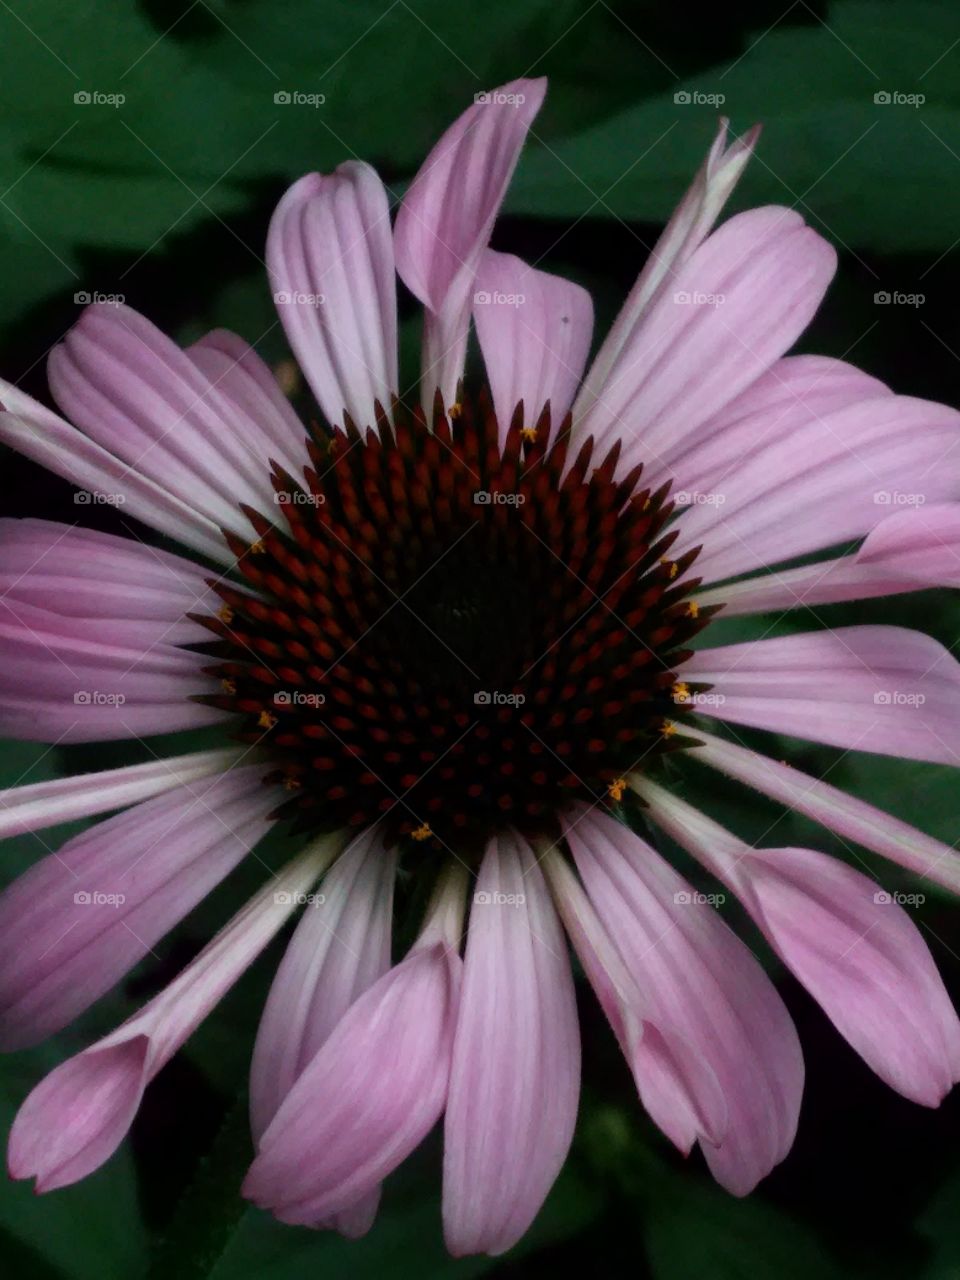 Flower Enchinacea. Flower from my garden